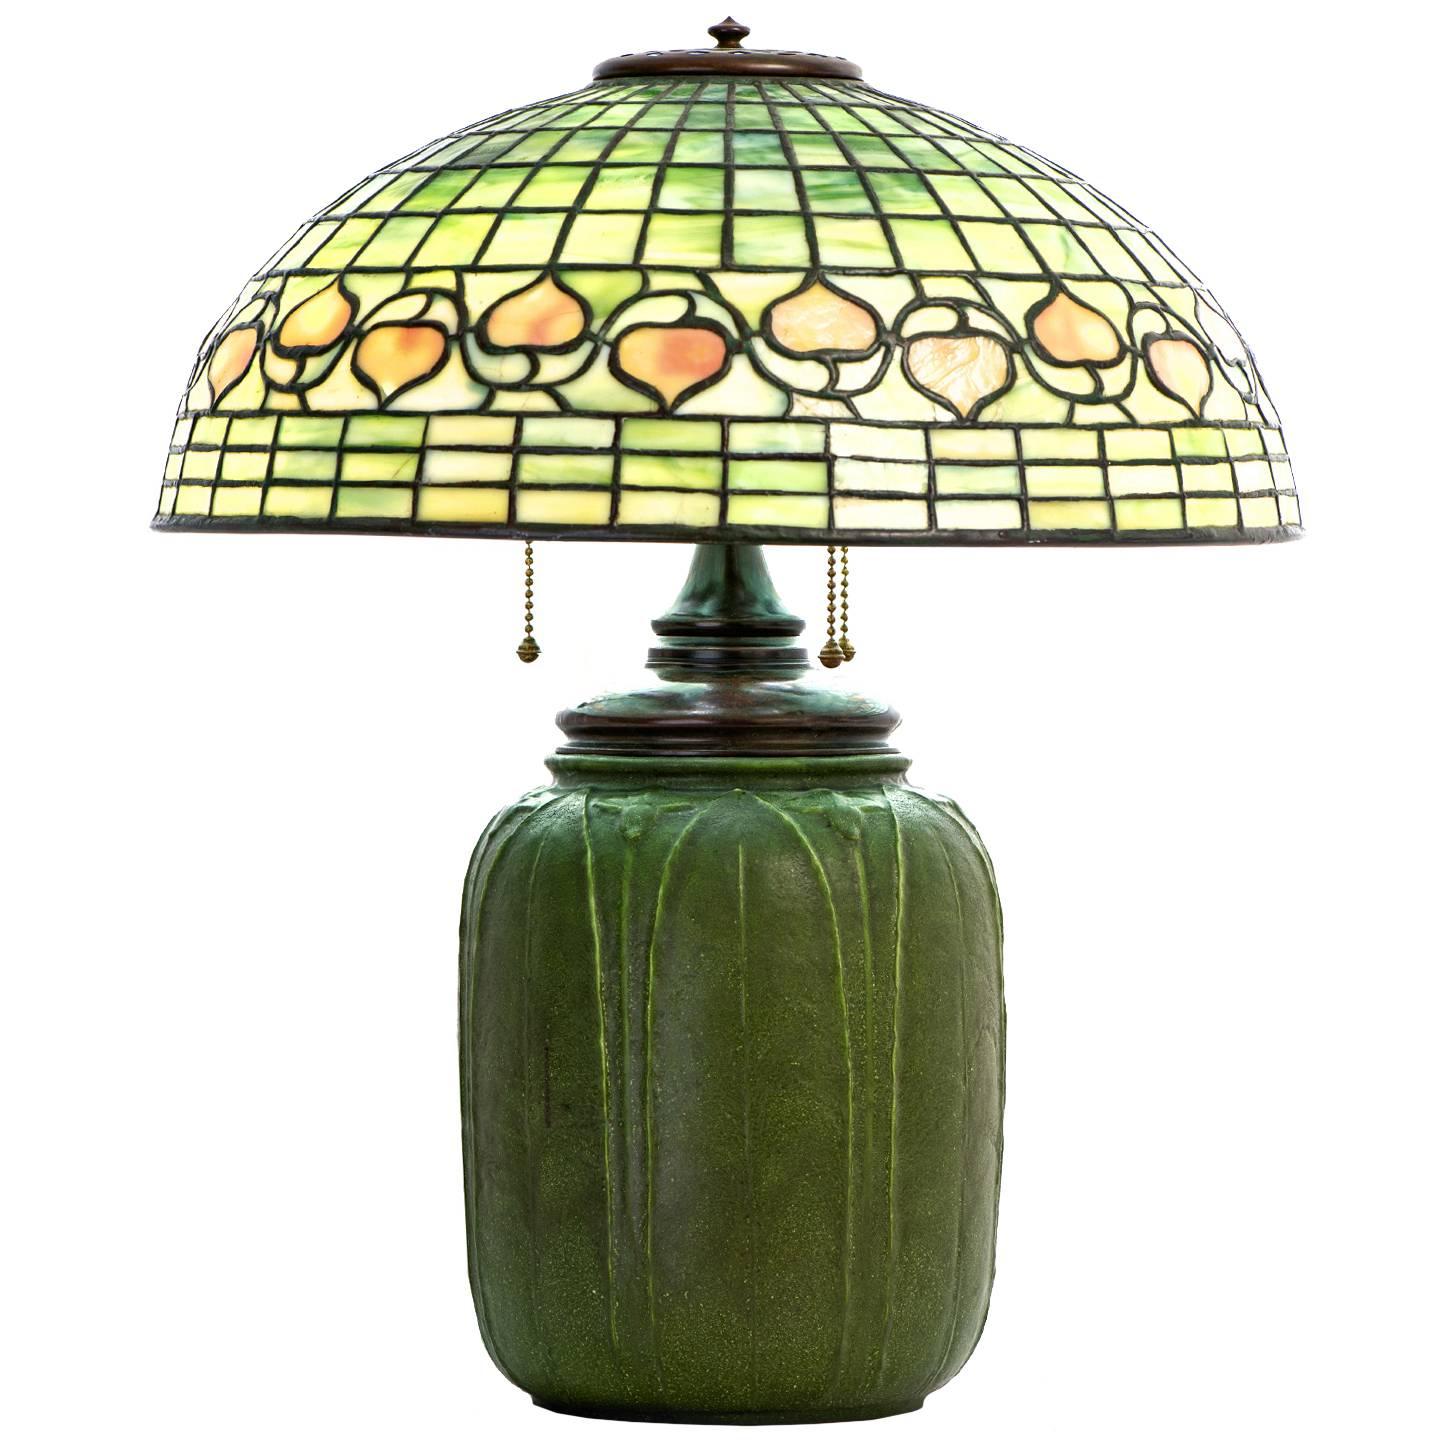 Signed Tiffany Studios Leaded Glass Acorn Lamp with Grueby Base